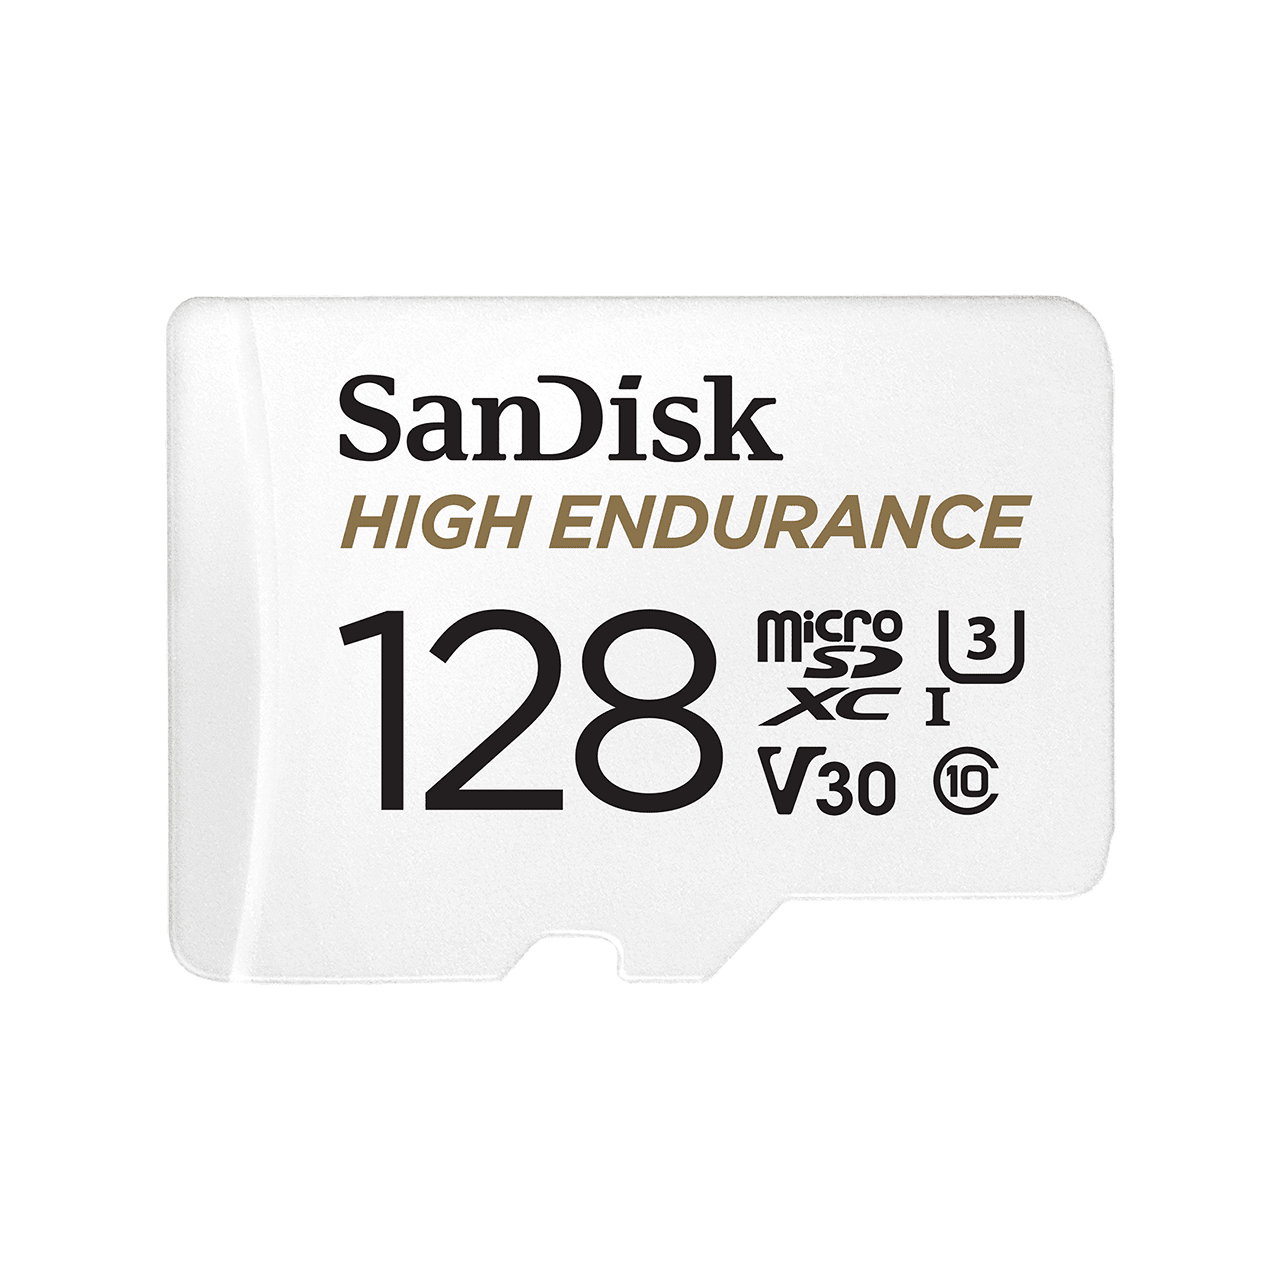 SanDisk High Endurance 128GB microSD Card